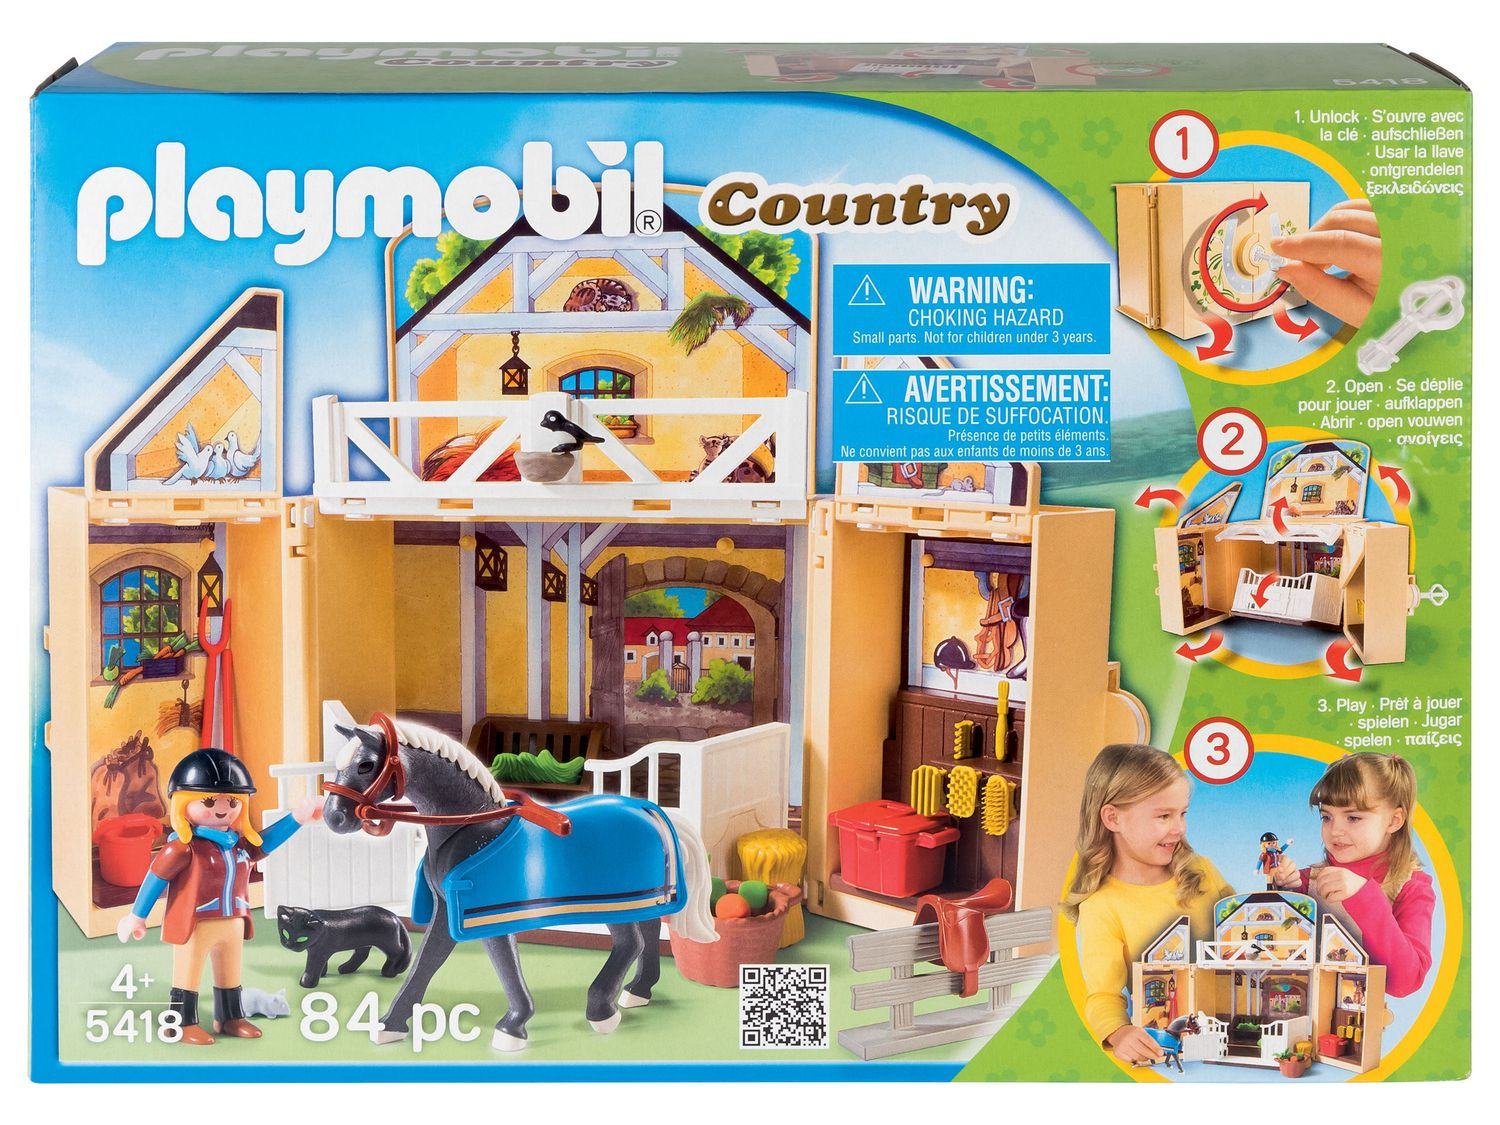 Voorwaarde opgraven chirurg Playmobil Paardenstal online kopen op Lidl.be